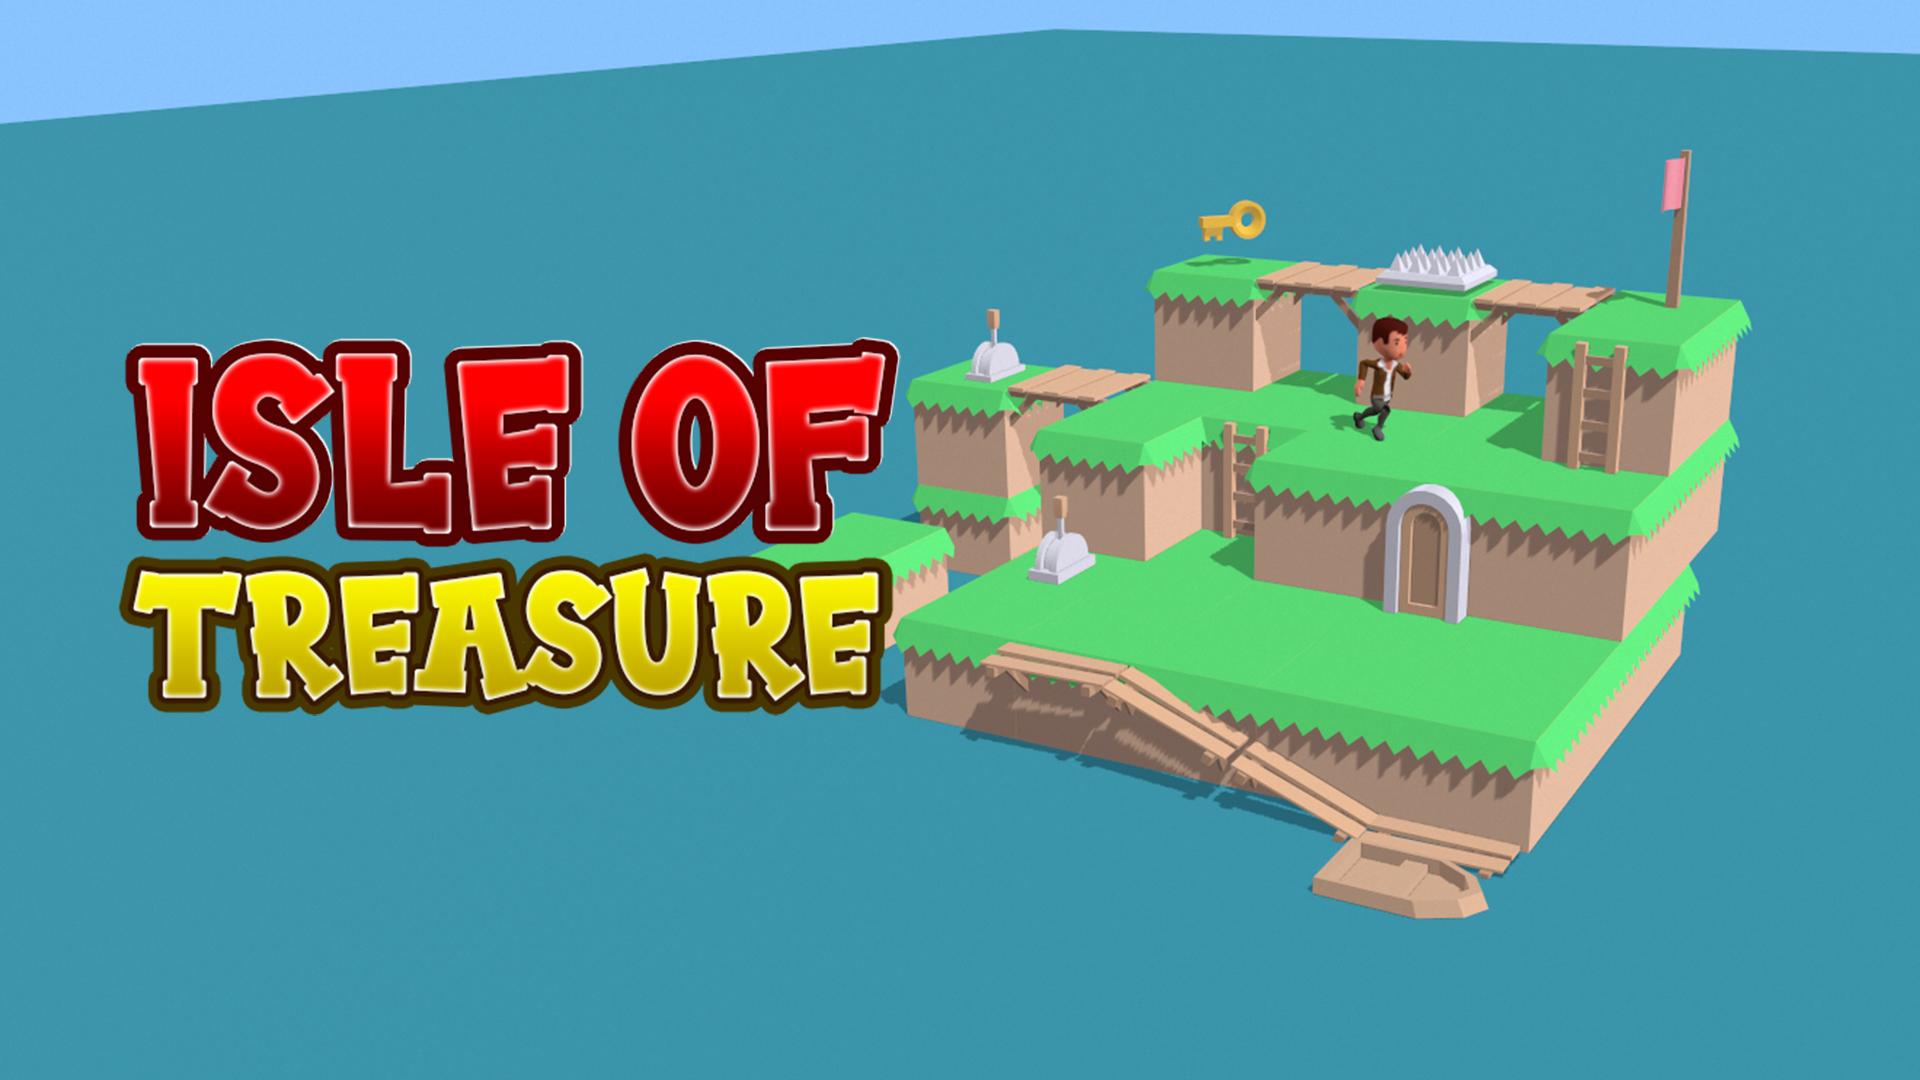 Isle of treasure